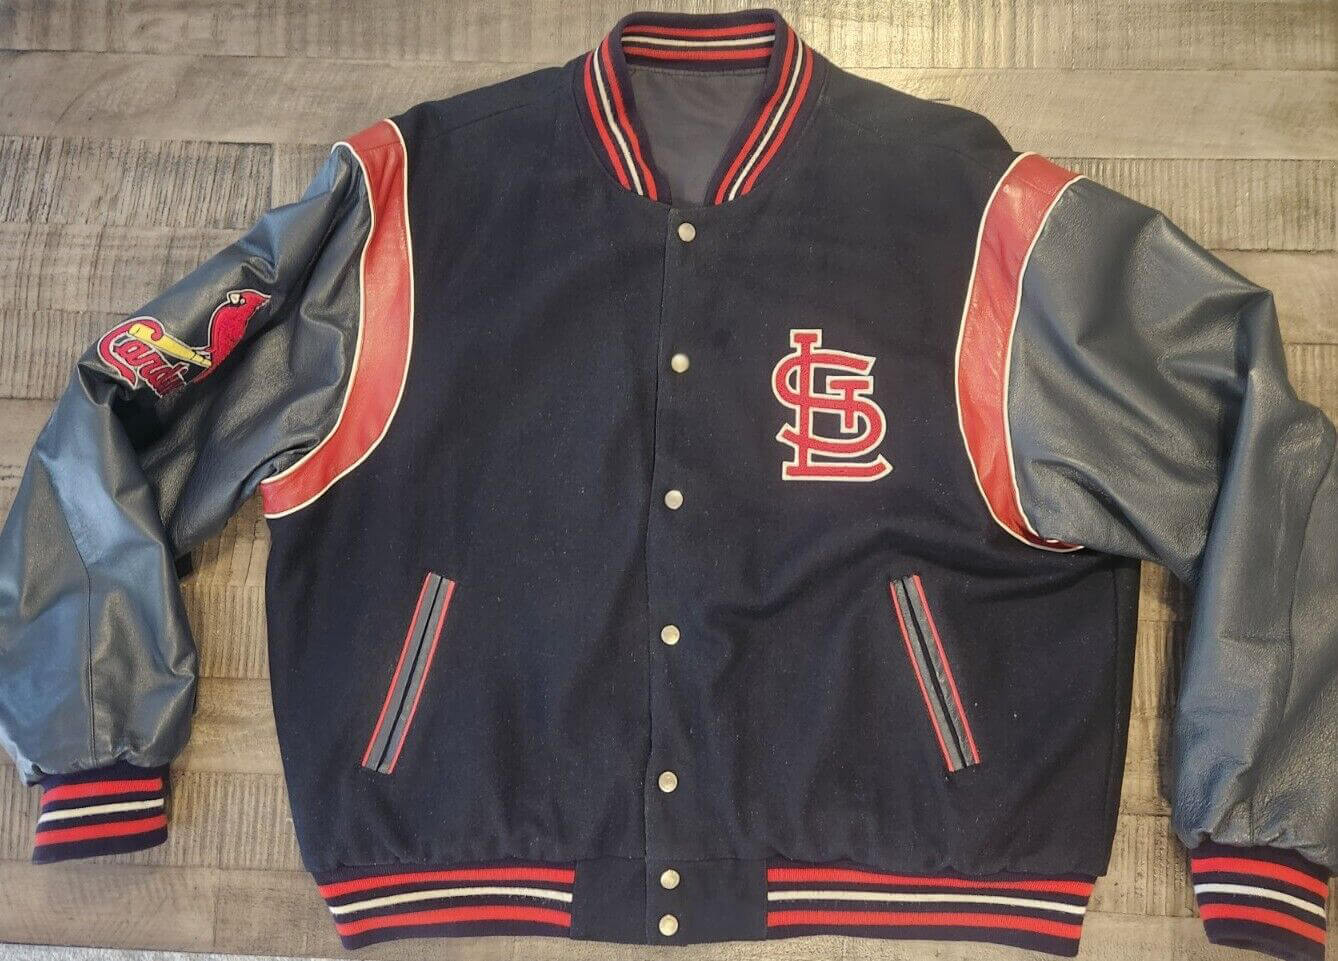 Cardinals St. Louis Red Varsity Jacket | St. Louis Baseball Club Jacket